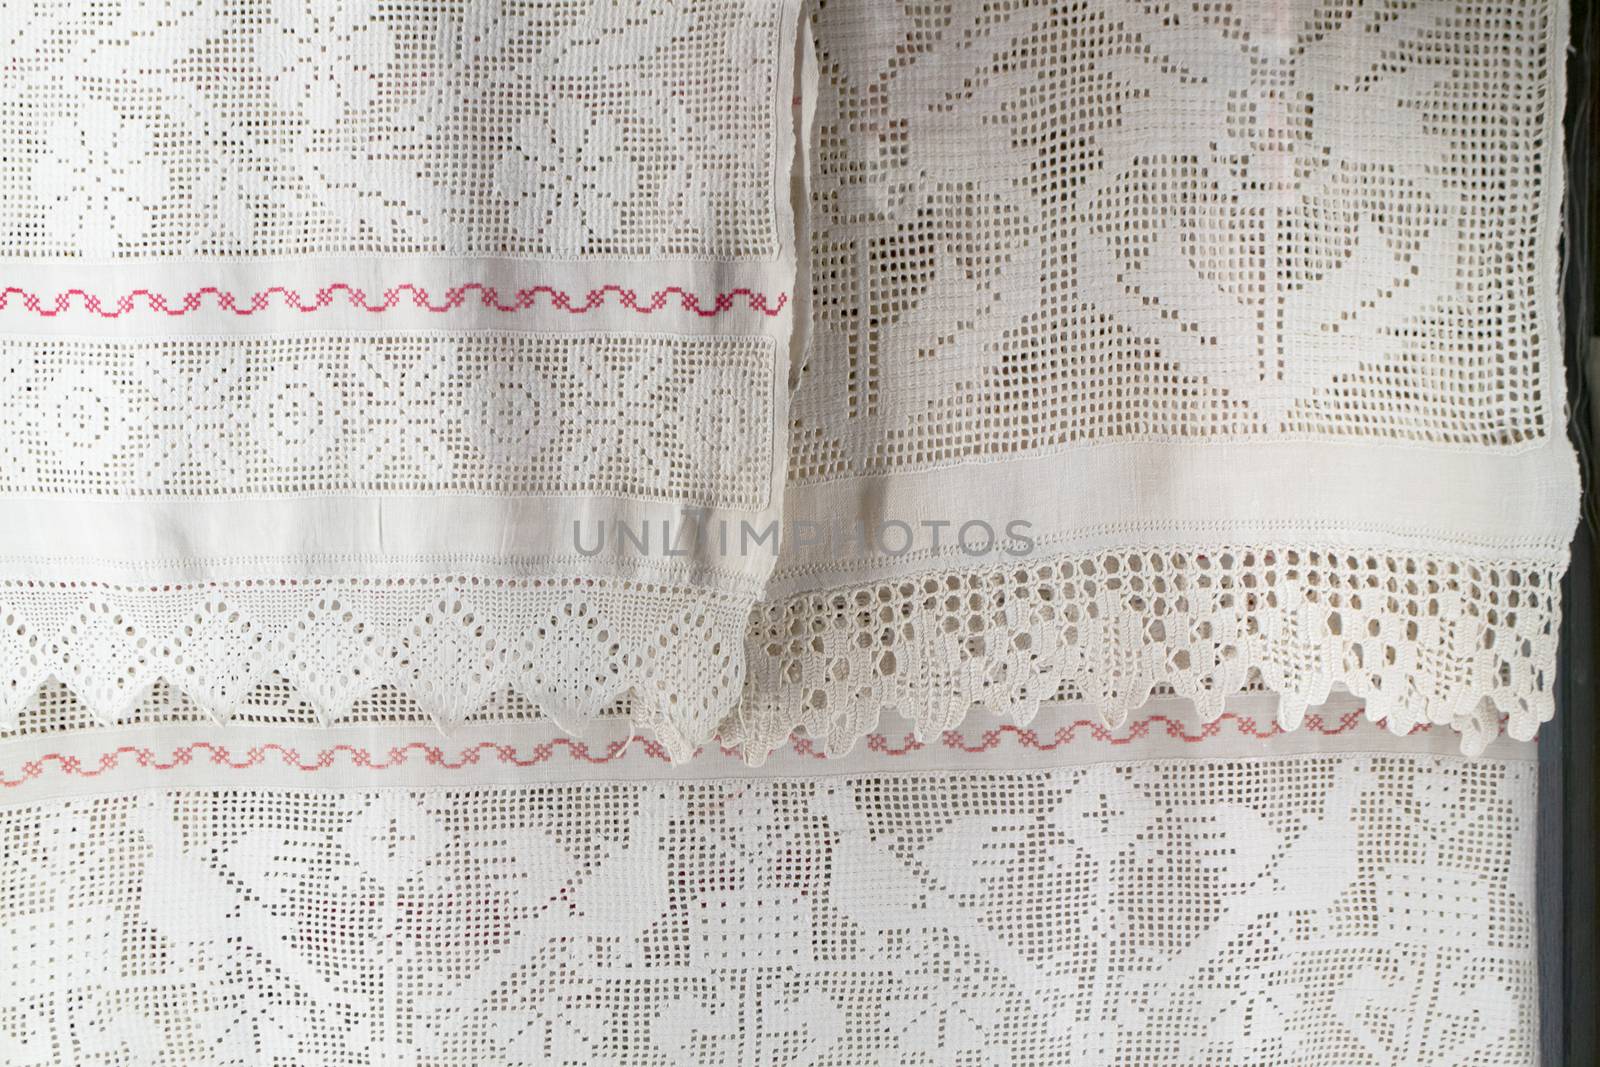 Traditional folk art knitted embroidery pattern on textile fabric, Belarus by annaolgabymonaco